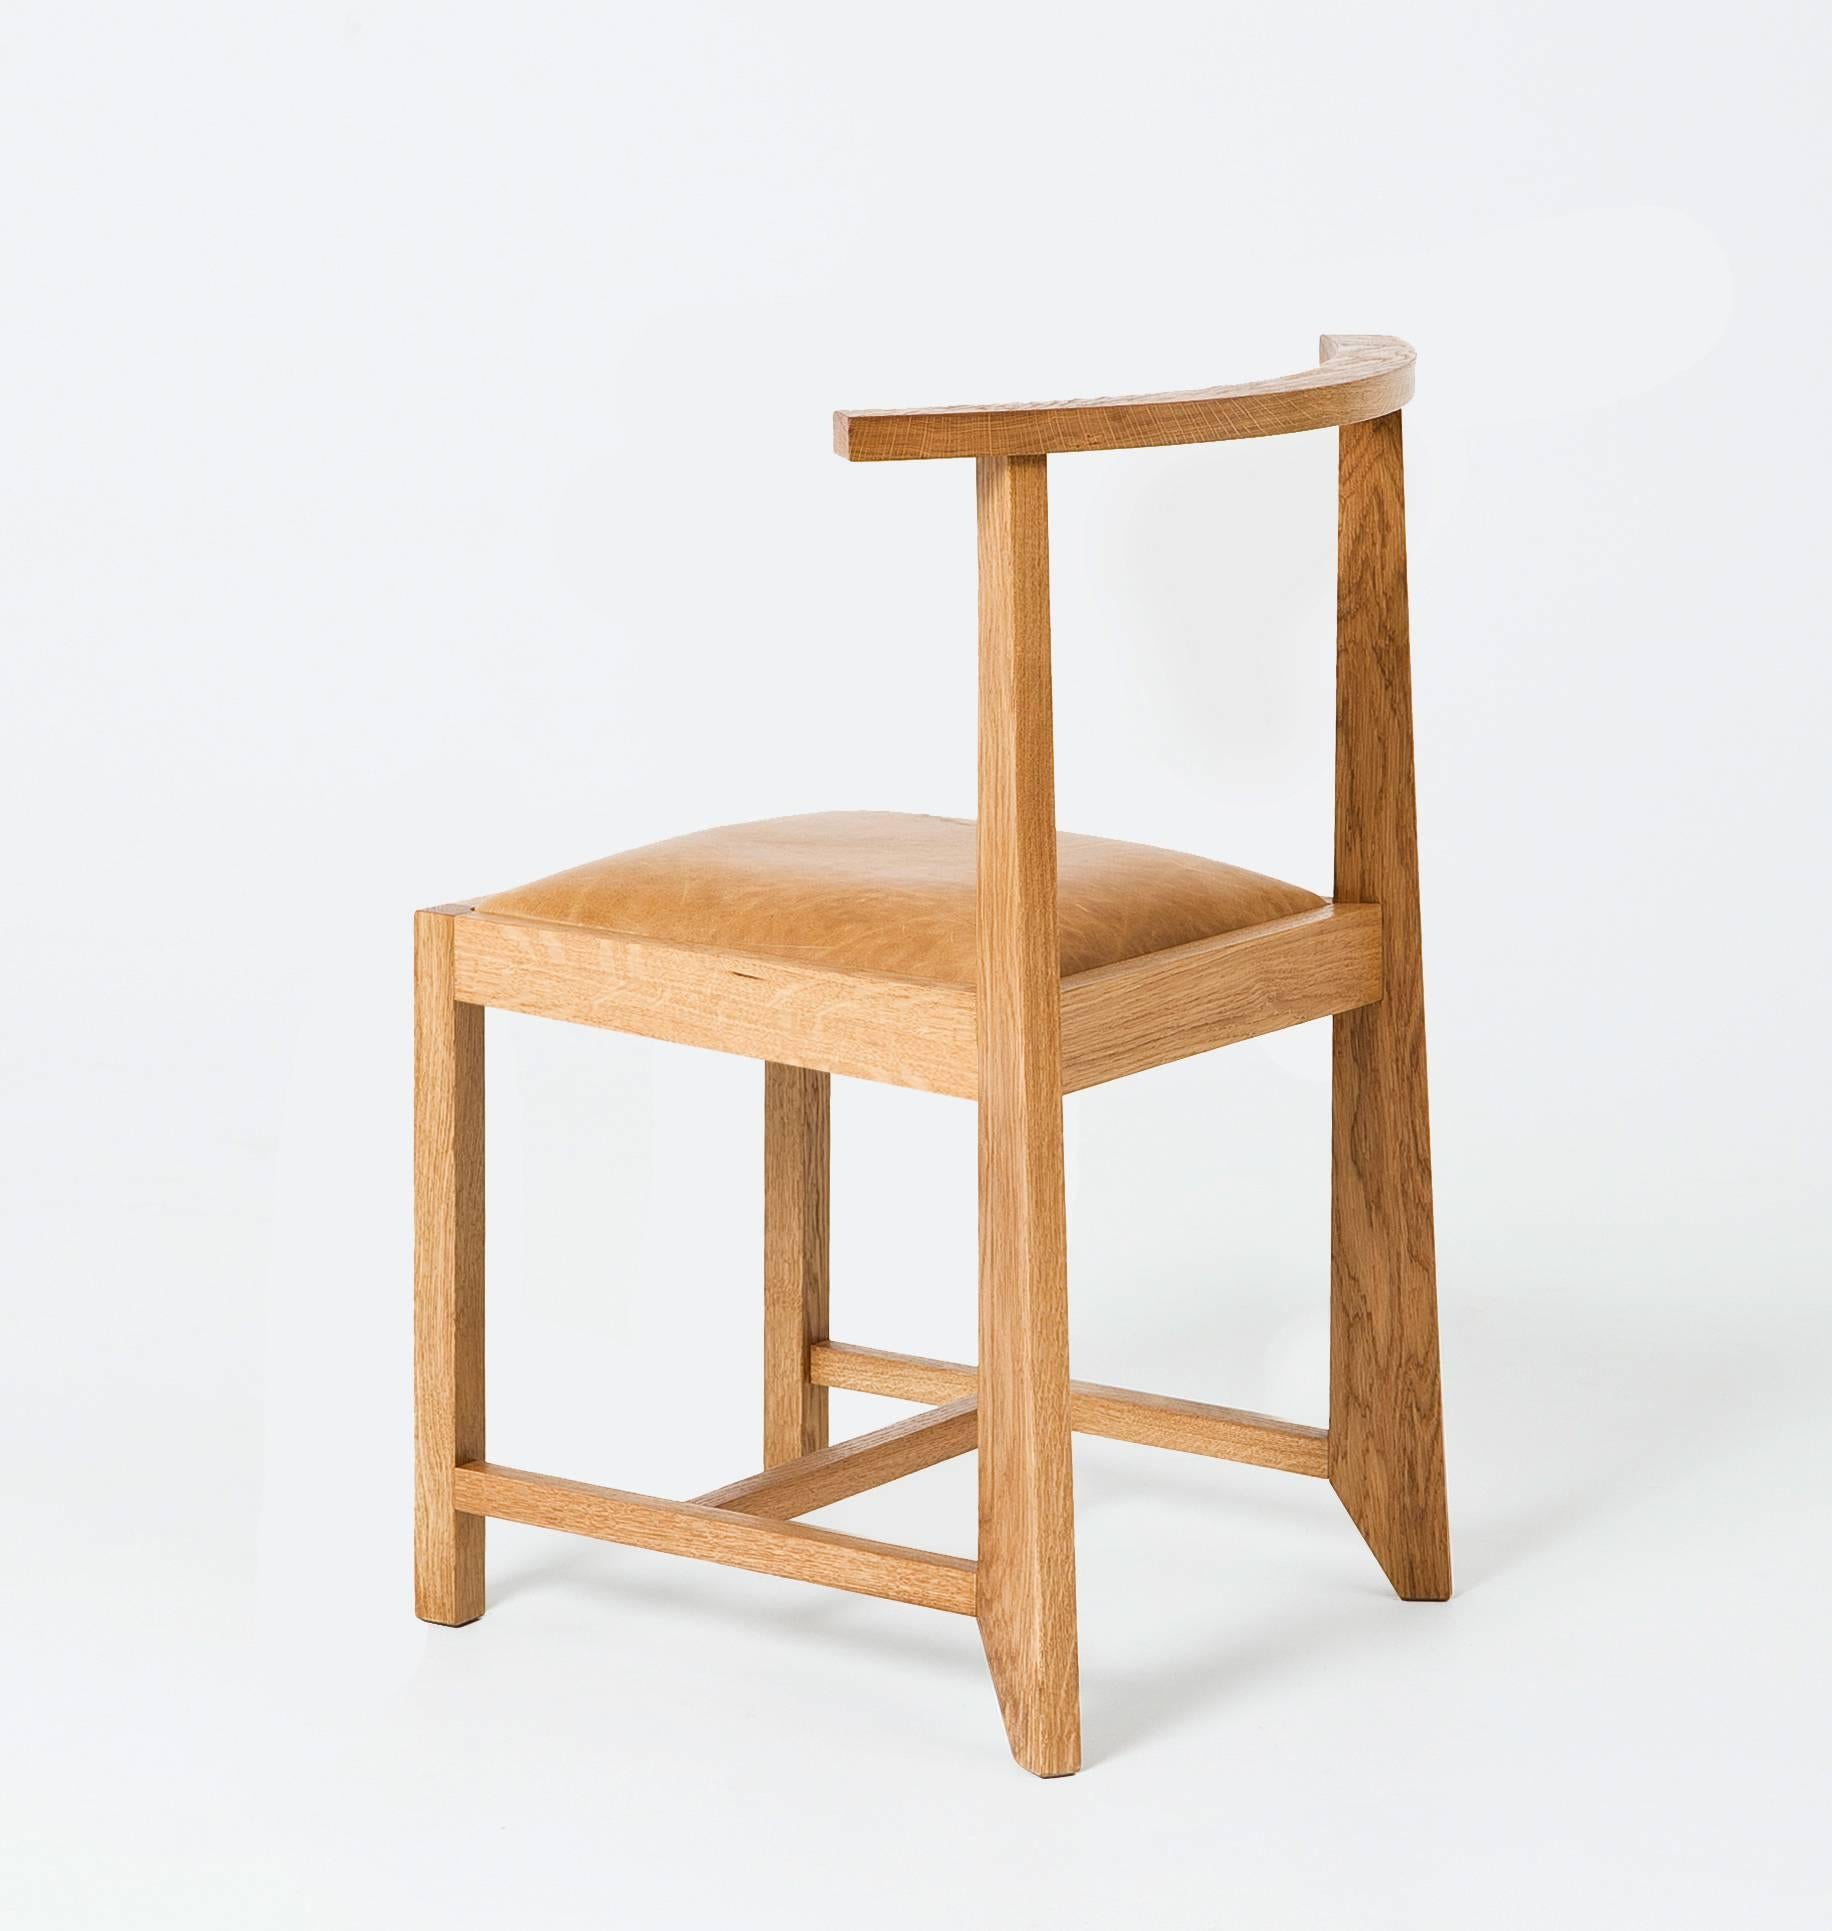 Chair by Russian designer Dmitry Samygin
Oak and leather

Measure: 82 cm x 51 cm x 61 cm
(32 x 20 x 24 in).